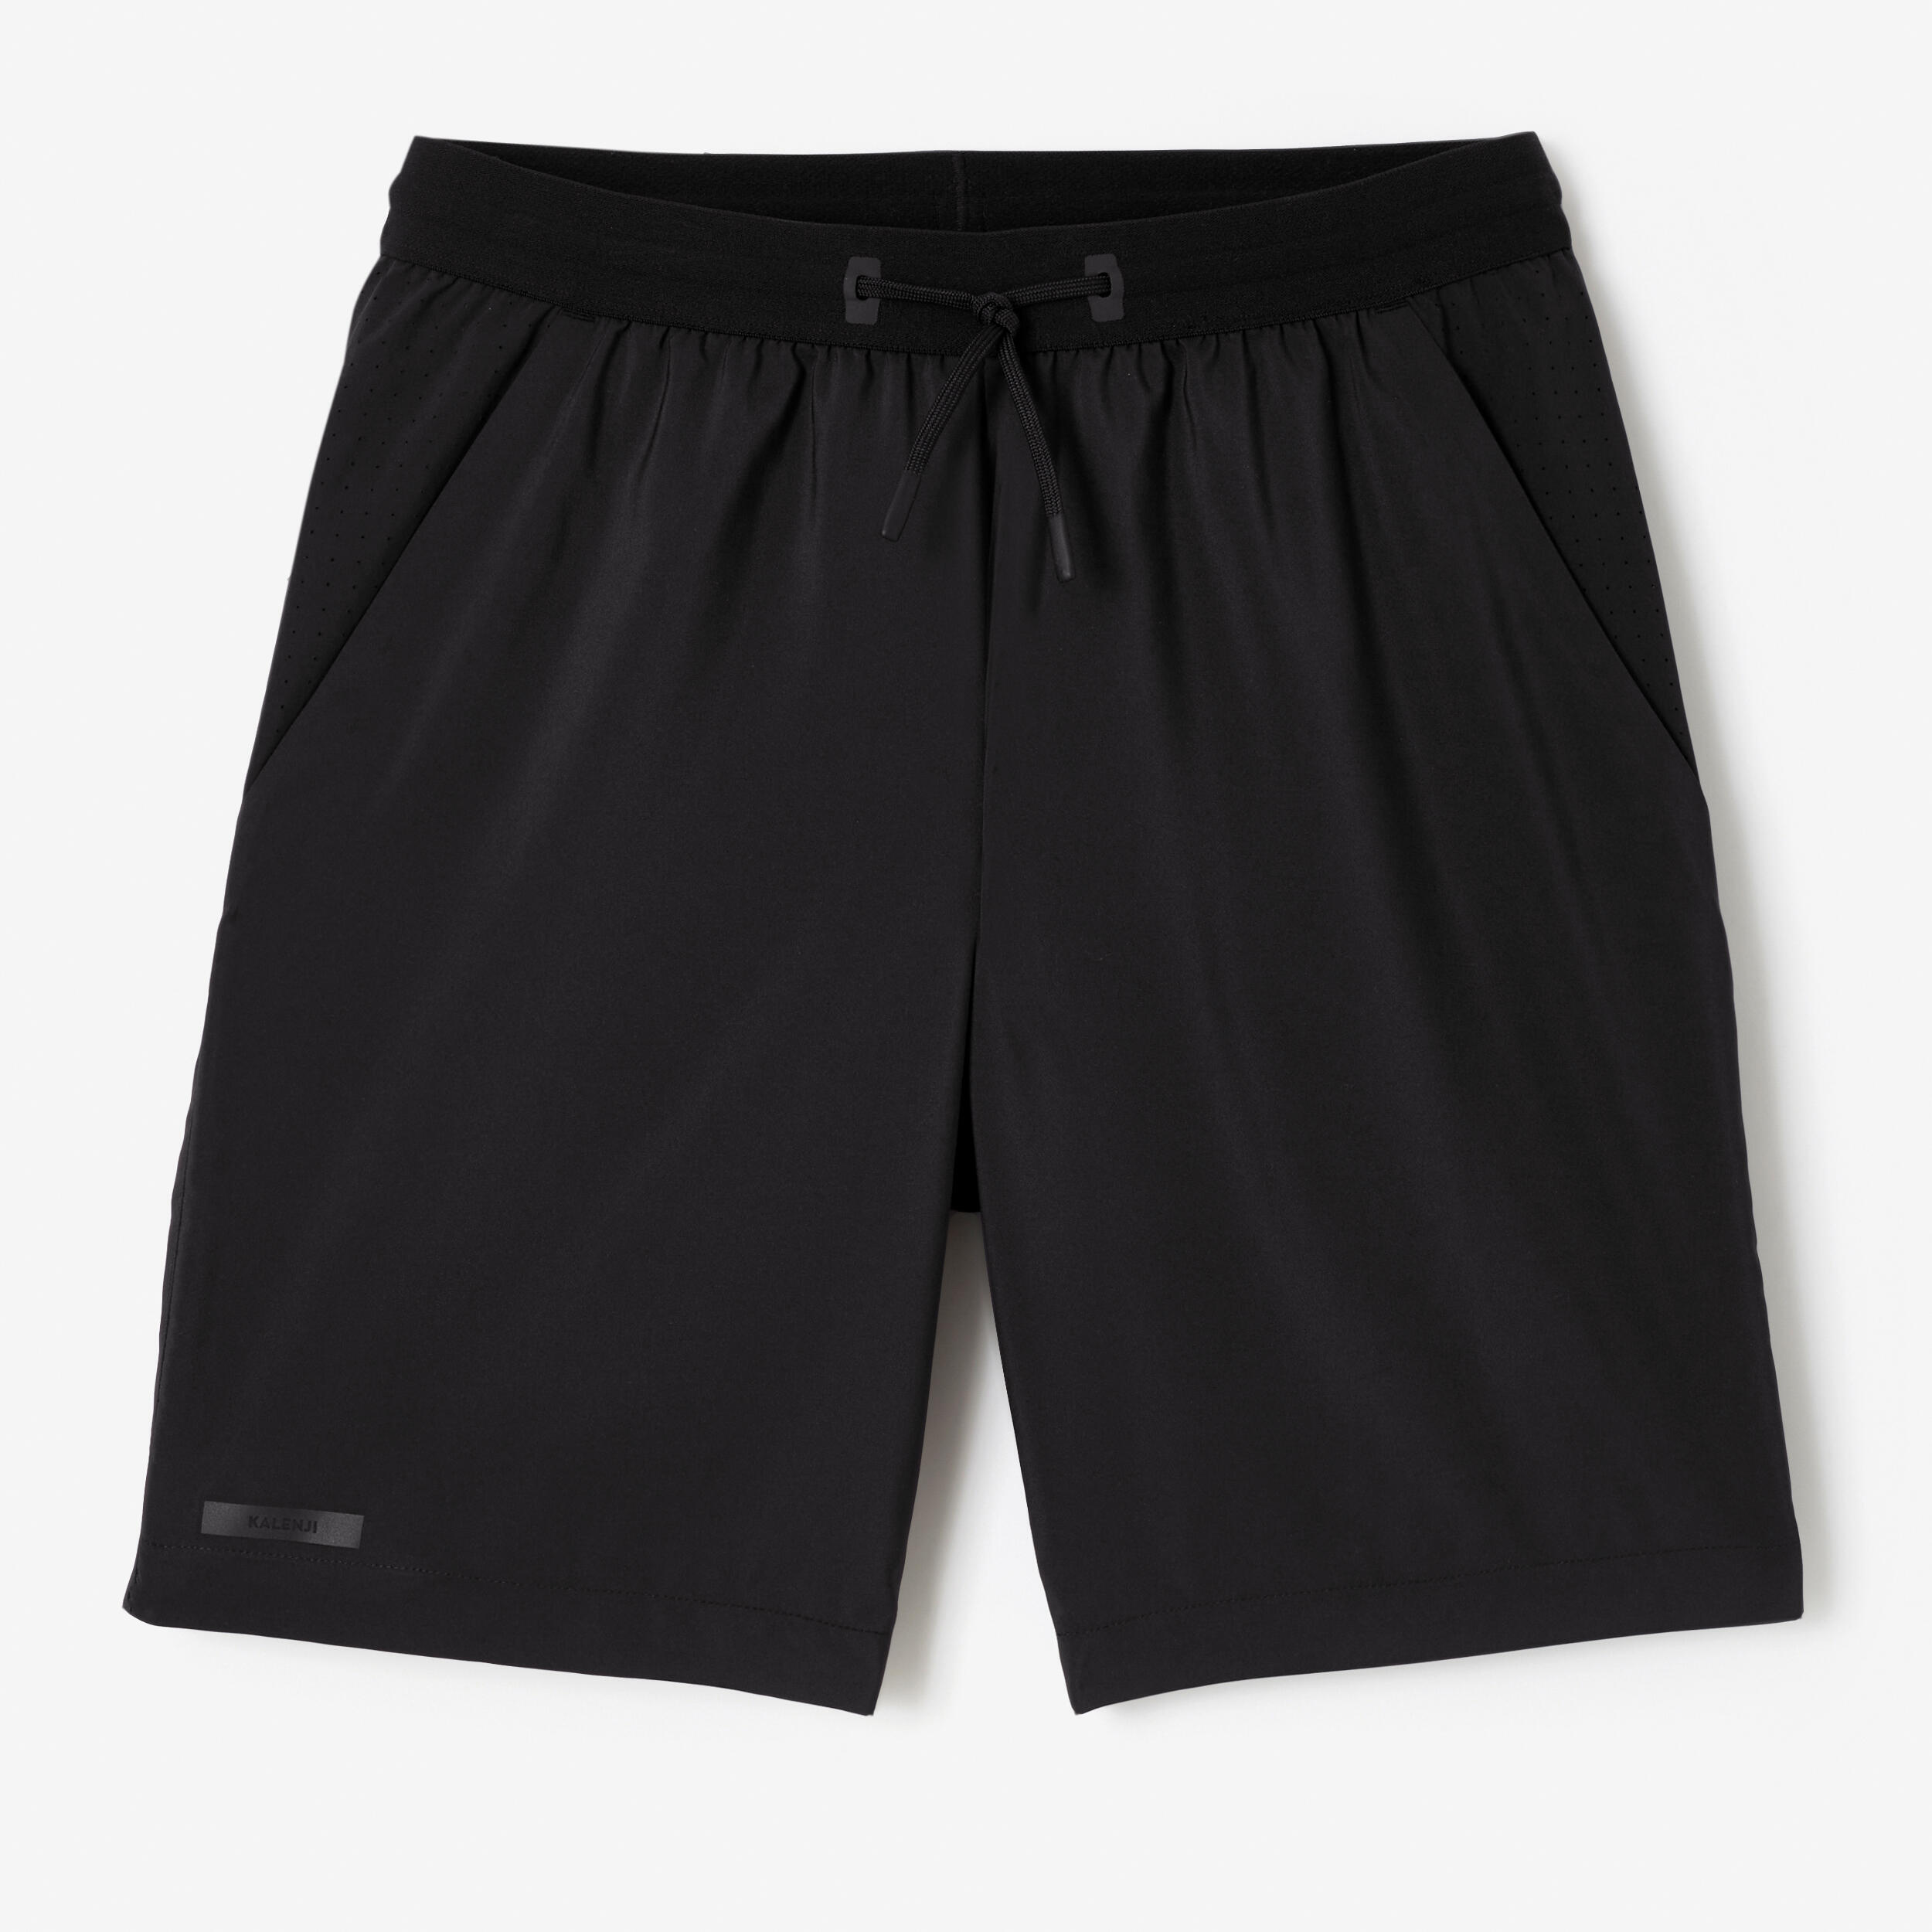 Men's Running Breathable Shorts Dry+ - Black 5/6